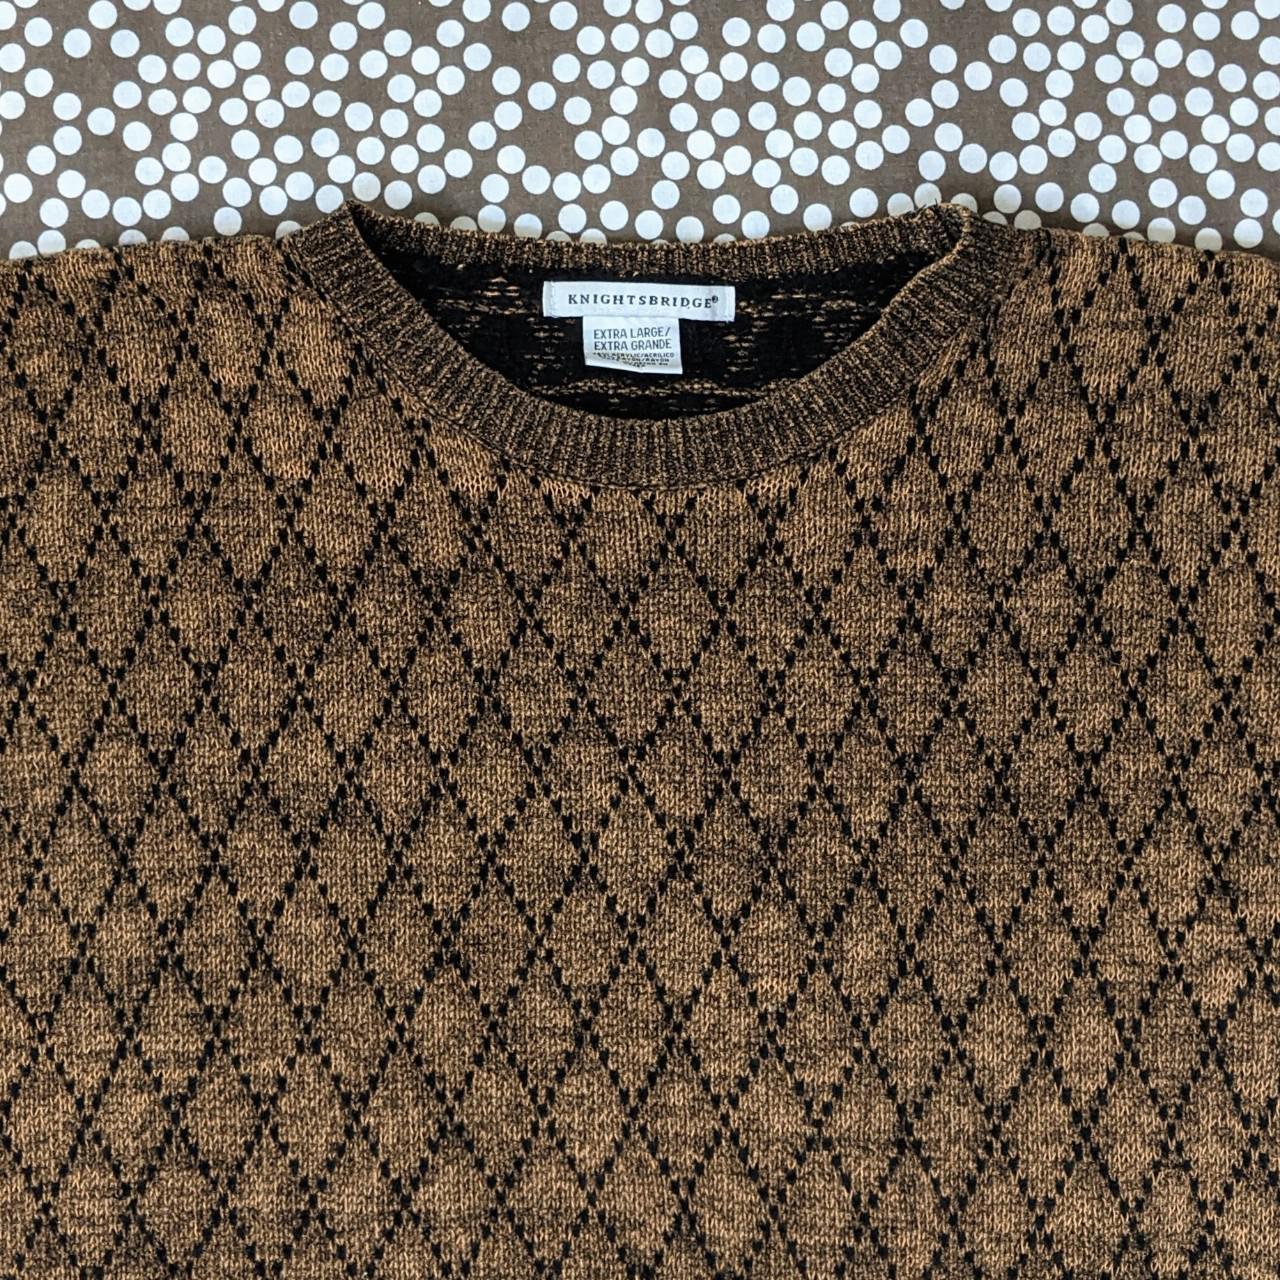 Product Image 2 - 🔸🔶🔸Vintage 90s Knightsbridge sweater, funky